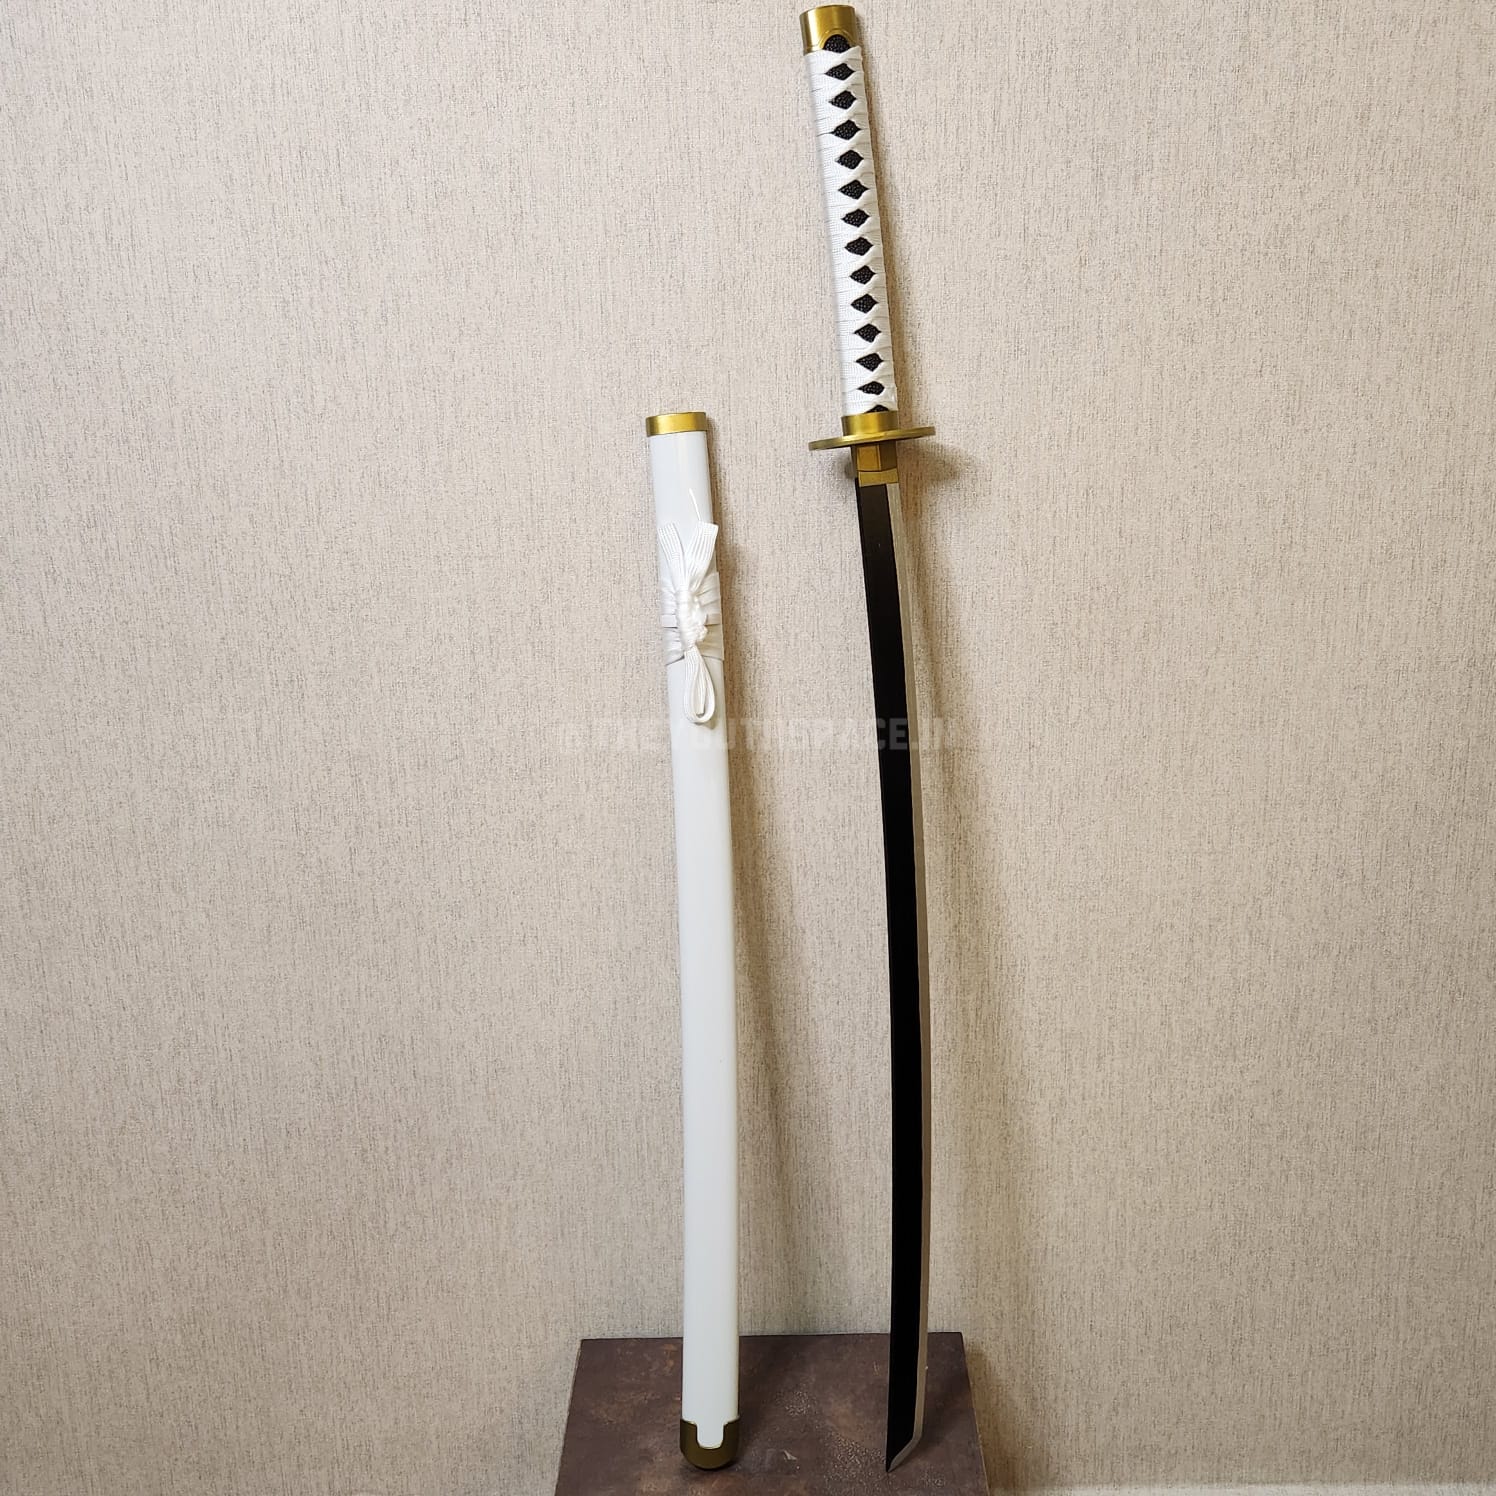 Zoros Wado Ichimonji wooden katana